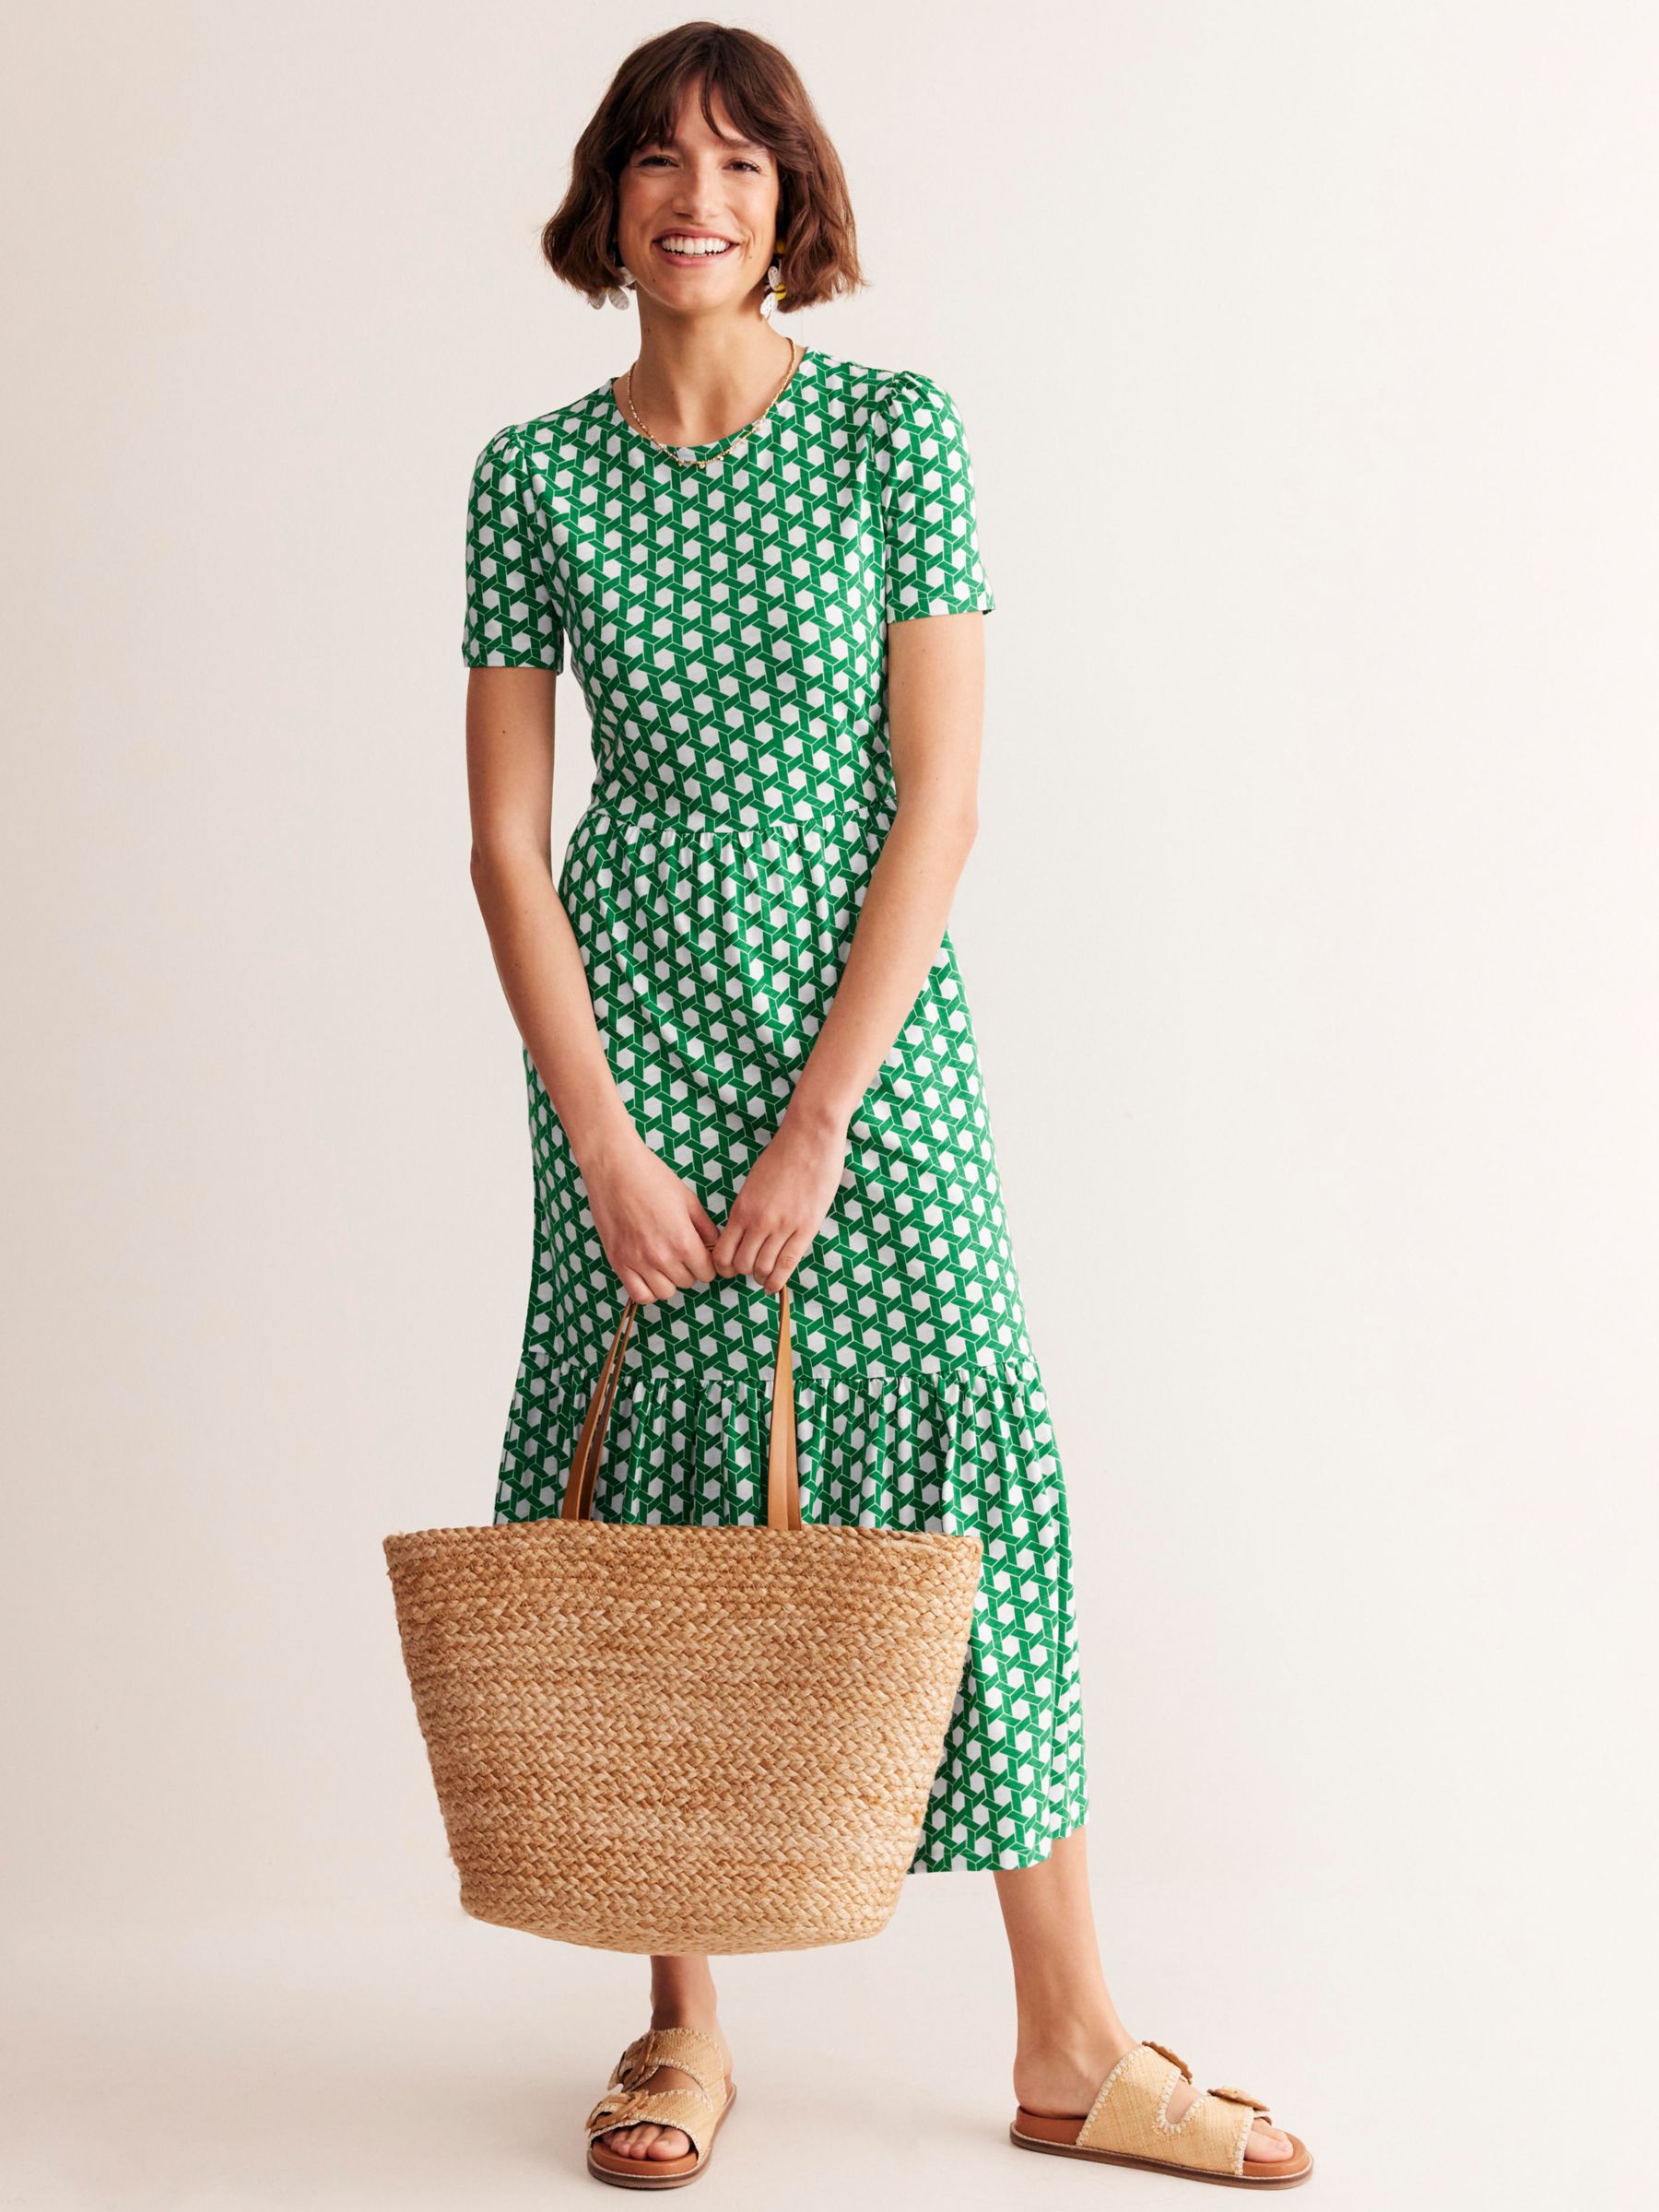 Boden Emma Honeycomb Geometric Tiered Jersey Dress, Green, 8